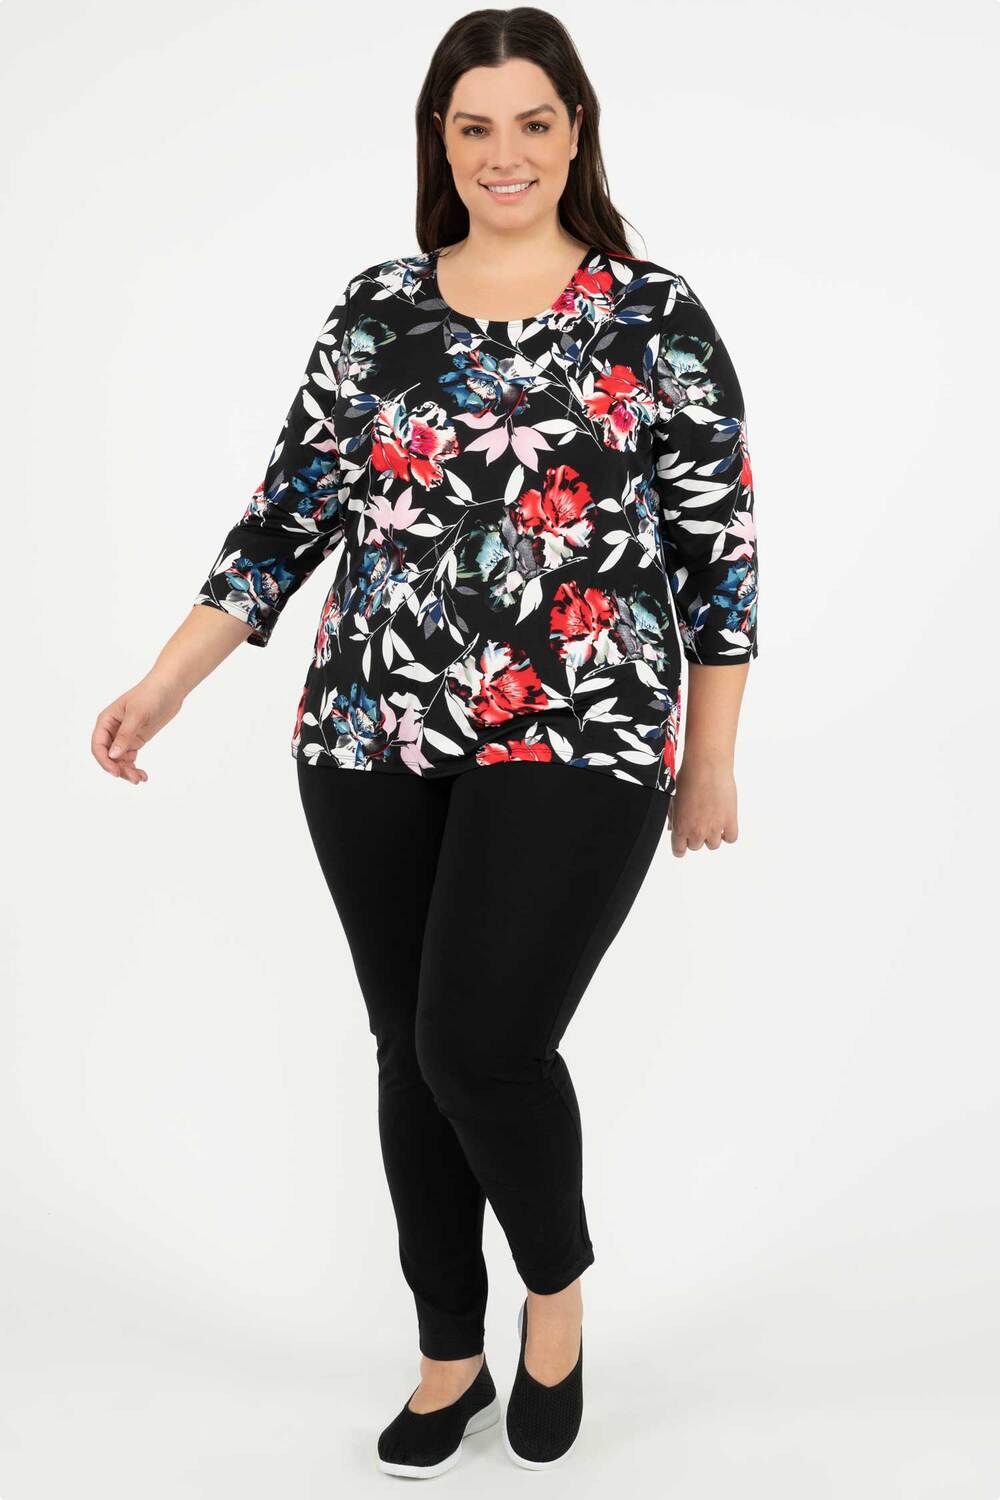 Floral print tunic blouse - Multicolored flowers - Plus Size